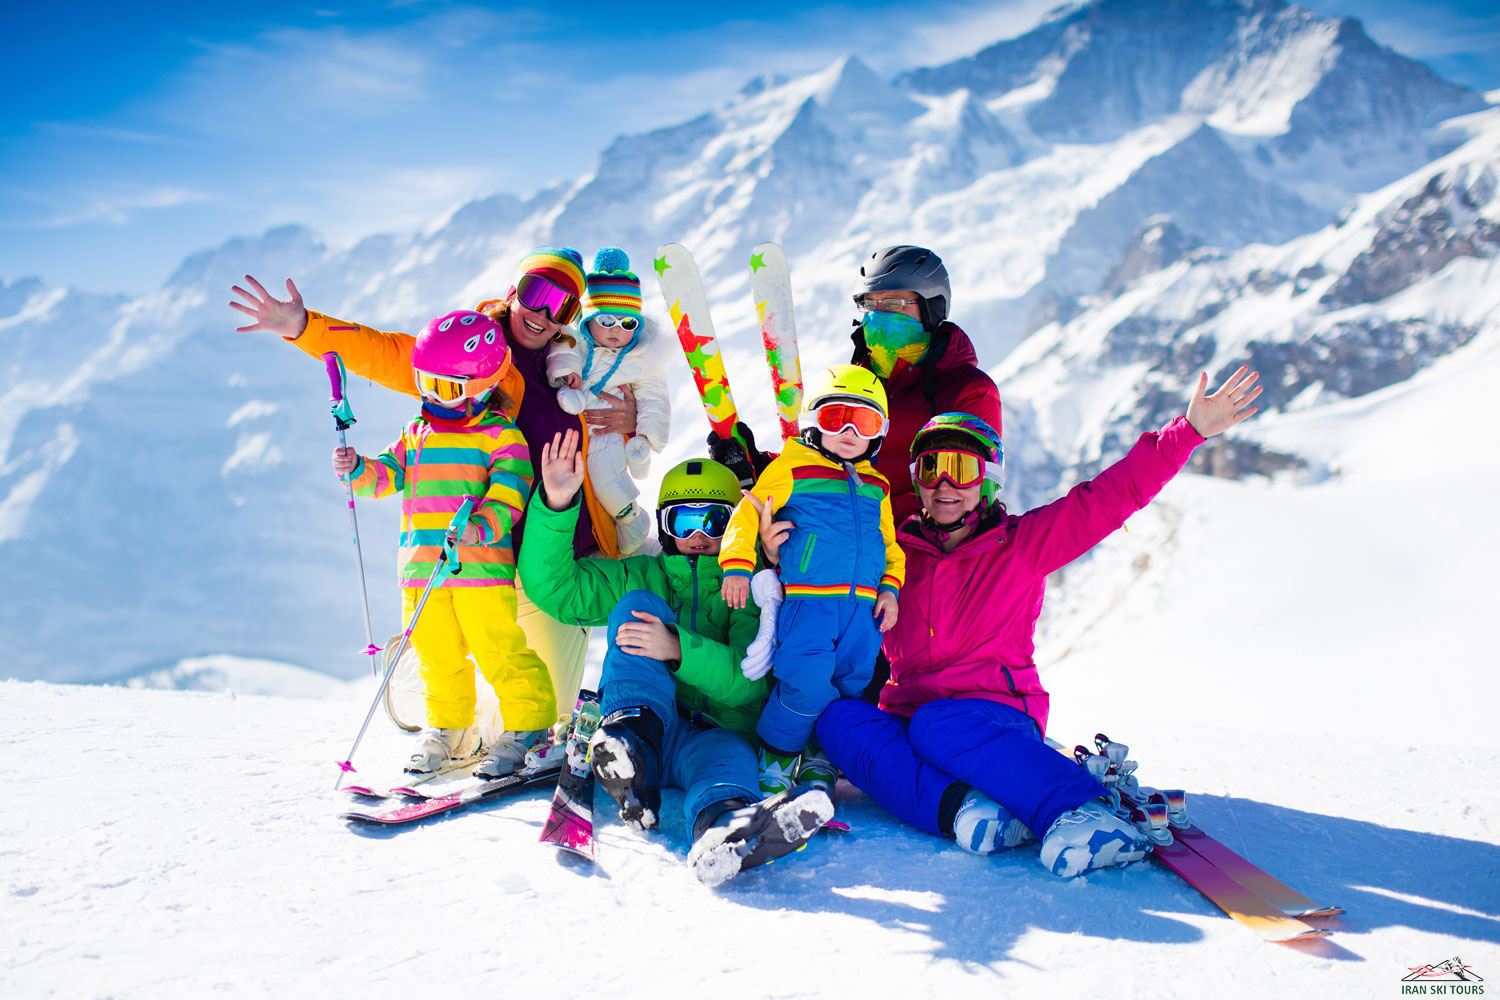 Best Destinations for Iran Ski tours